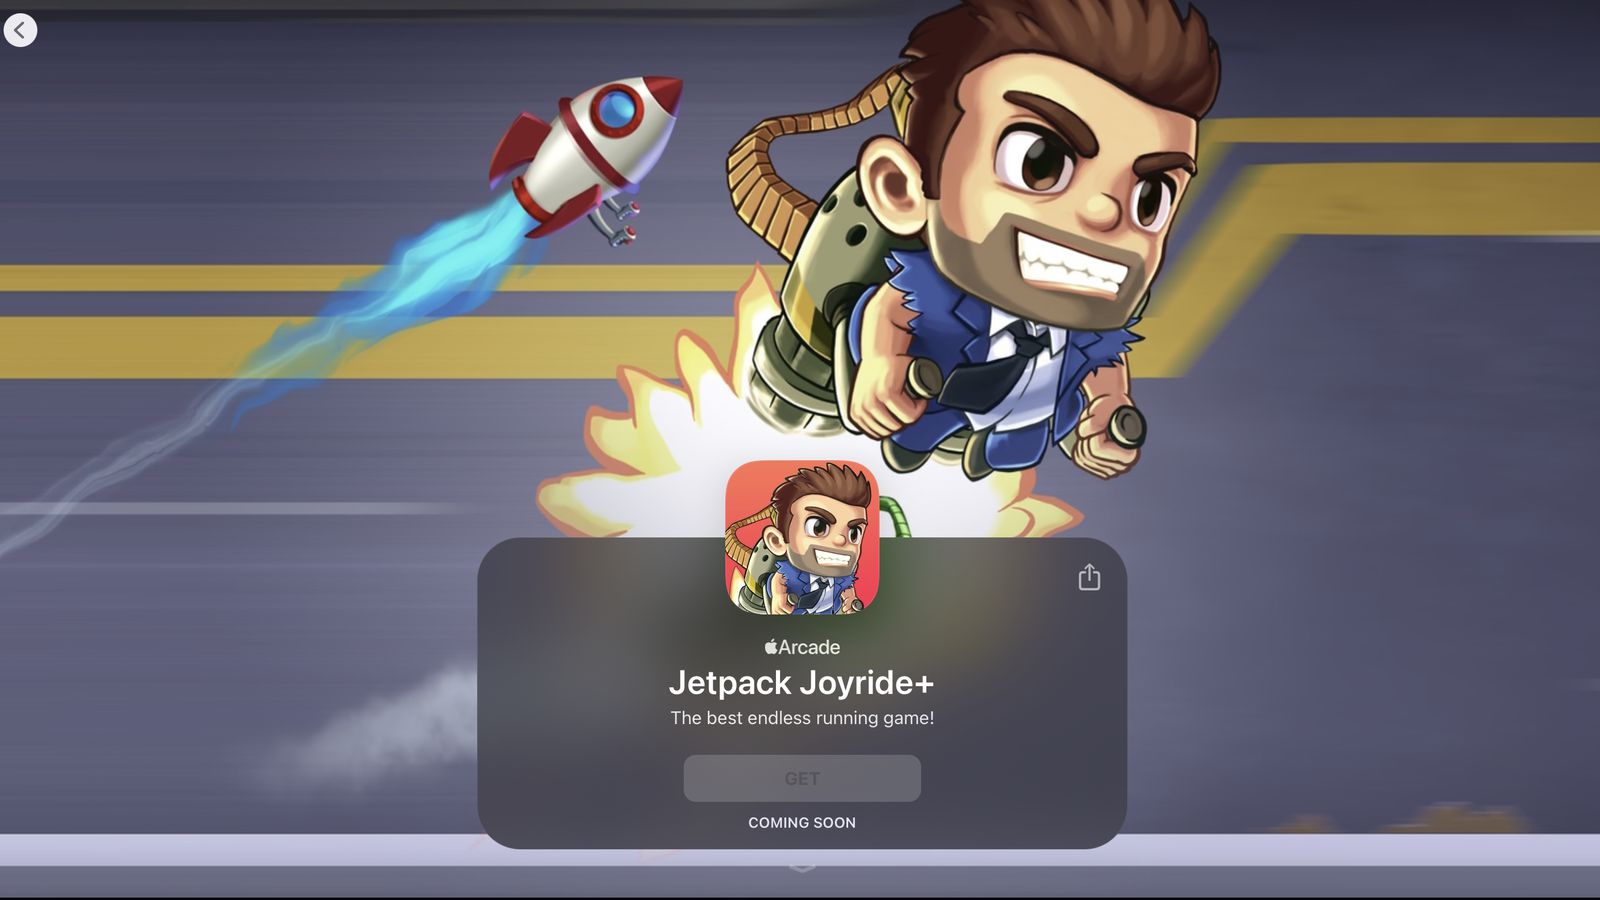 Popular Classic Endless Runner 'Jetpack Joyride' Coming to Apple Arcade -  MacRumors